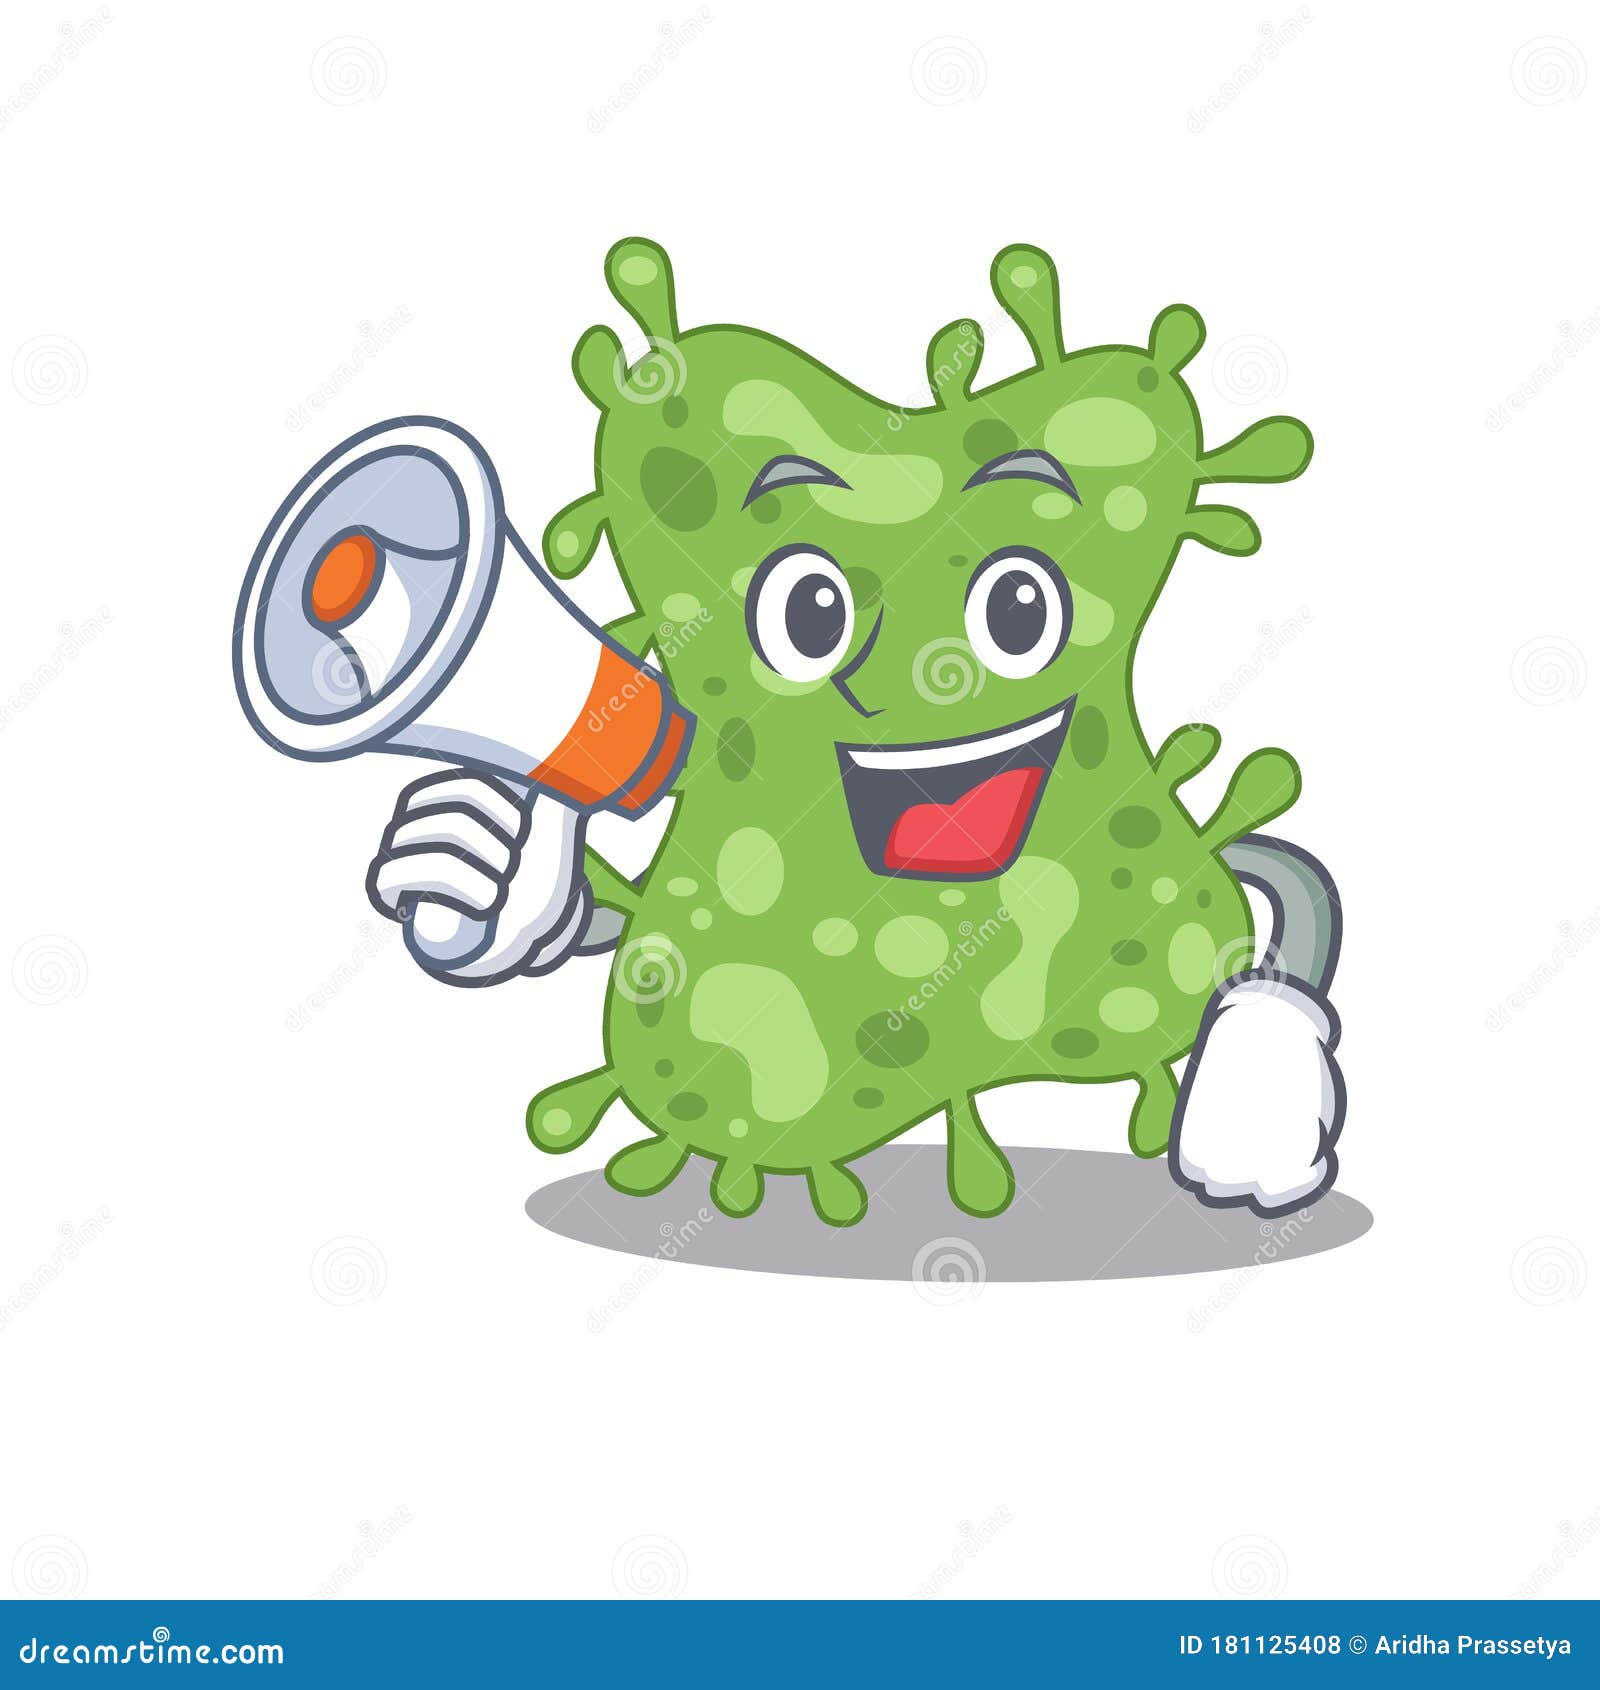 cartoon character of salmonella enterica having a megaphone